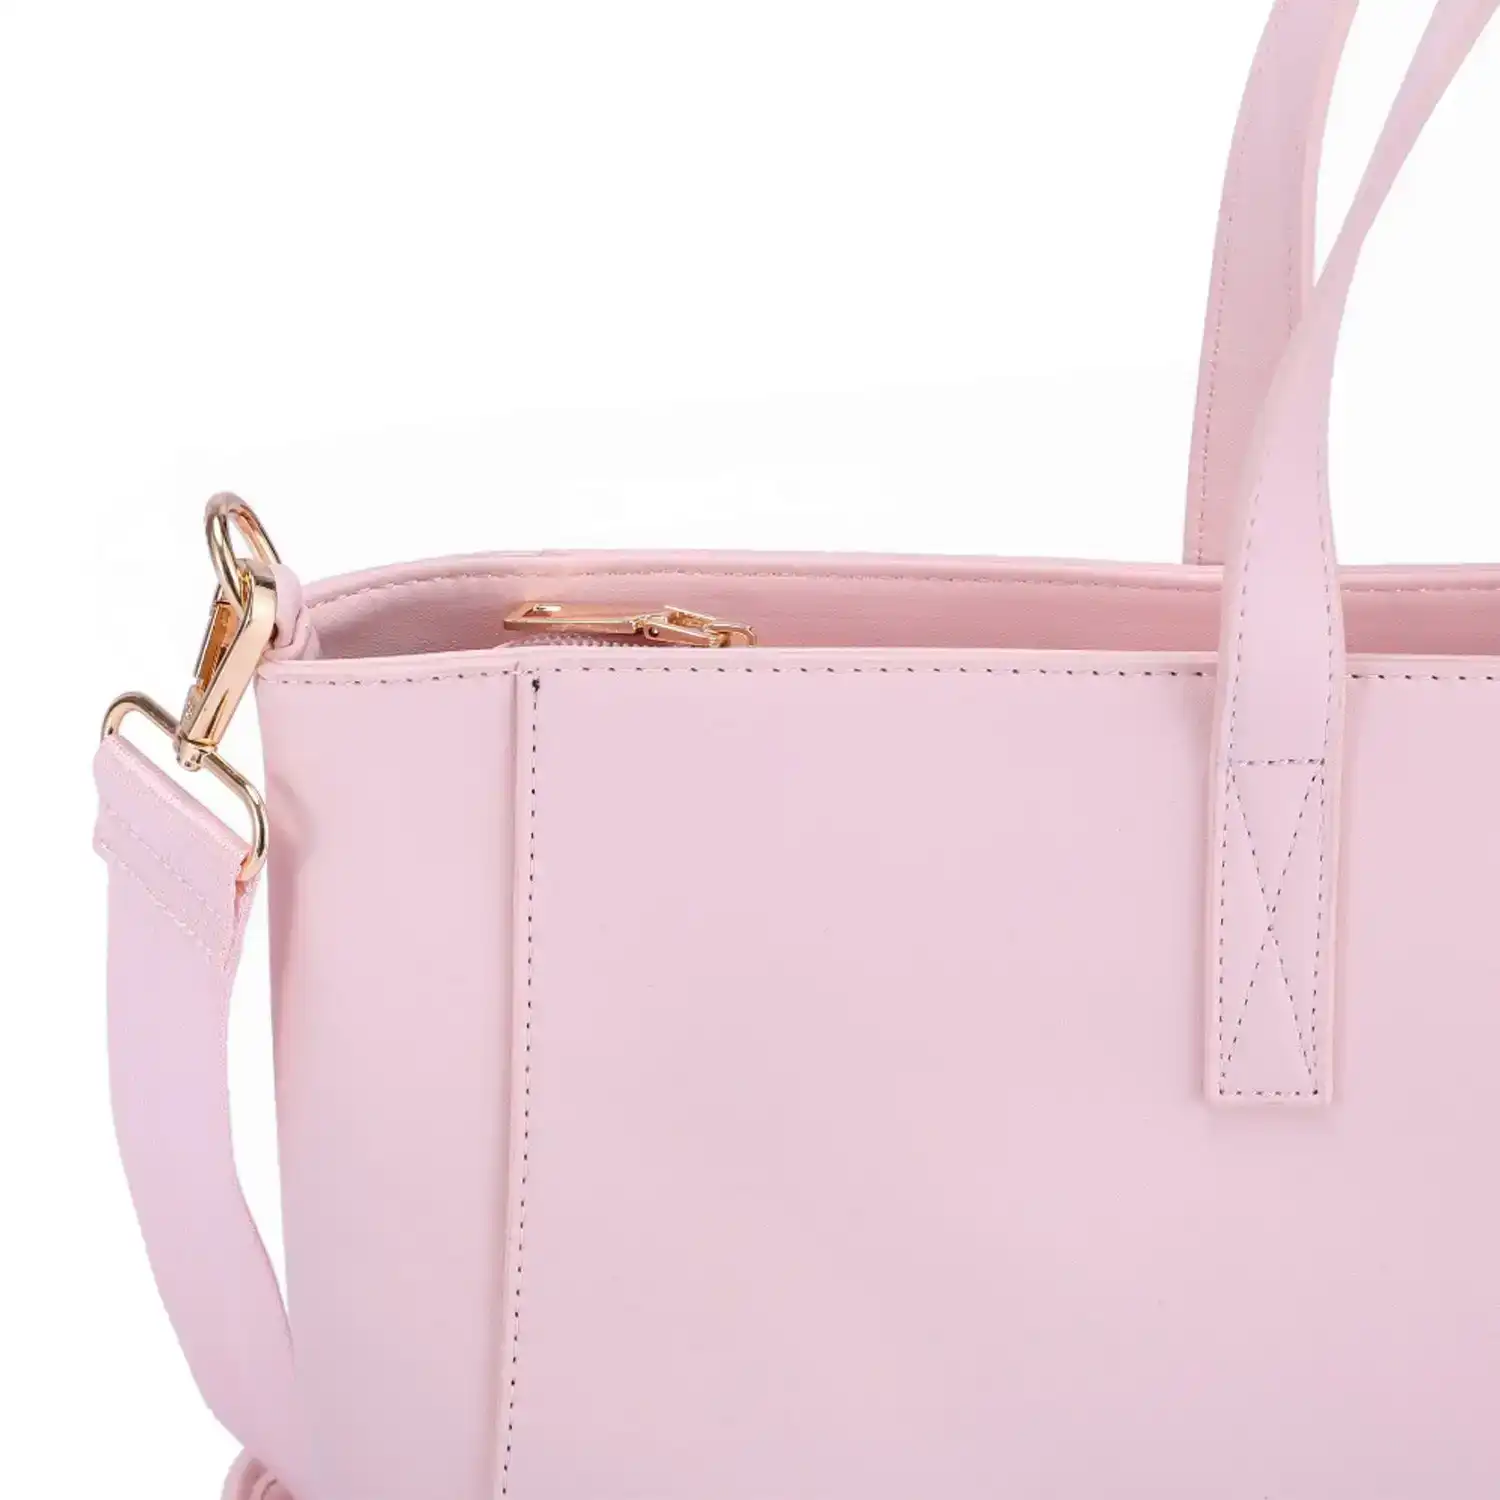 Kate Hill Bloom Travel Tote Bag w/ Attachable Shoulder Strap Blush 15.5L